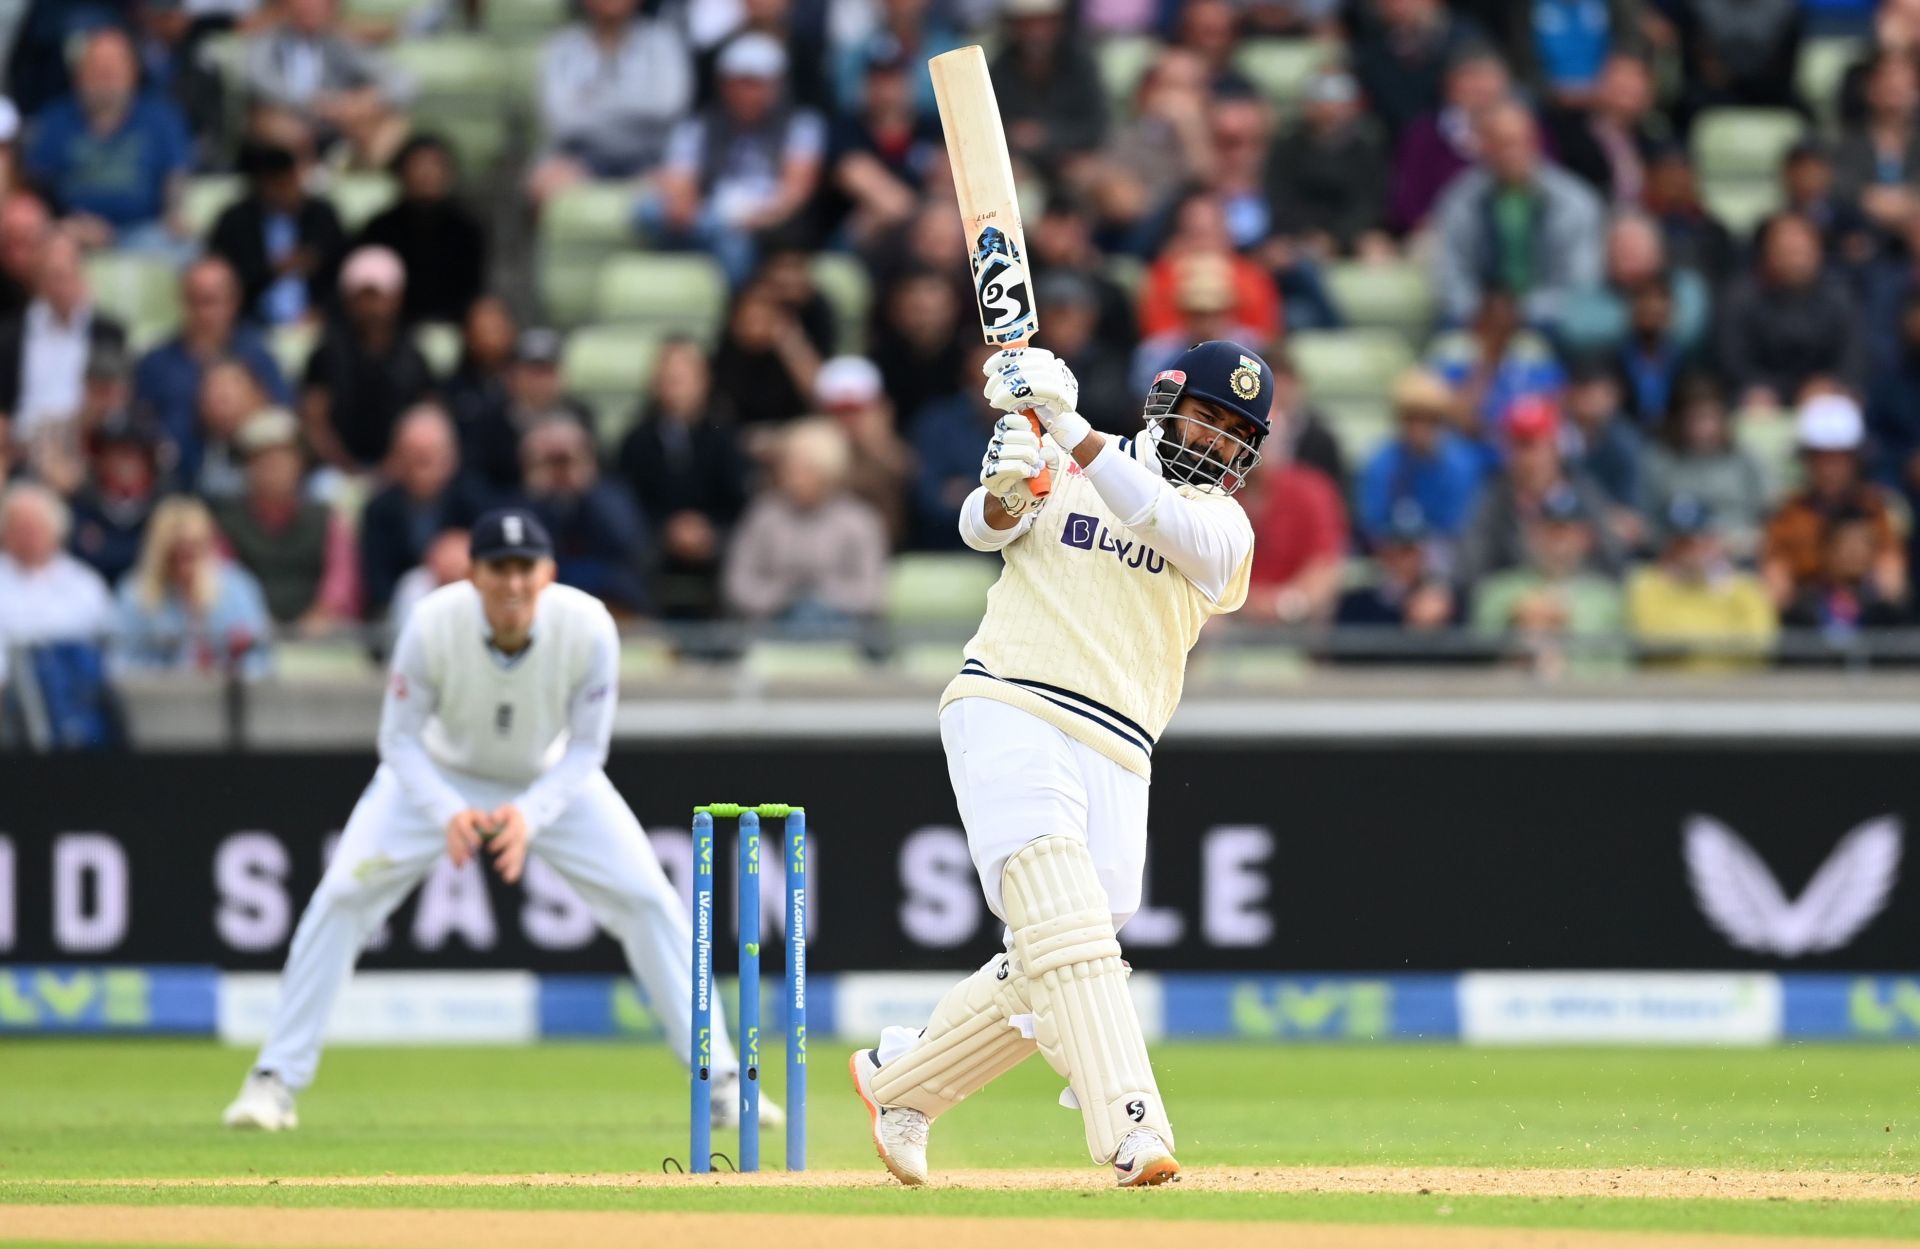 Ravindra Jadeja scored a brilliant hundred in the first innings of the Birmingham Test.